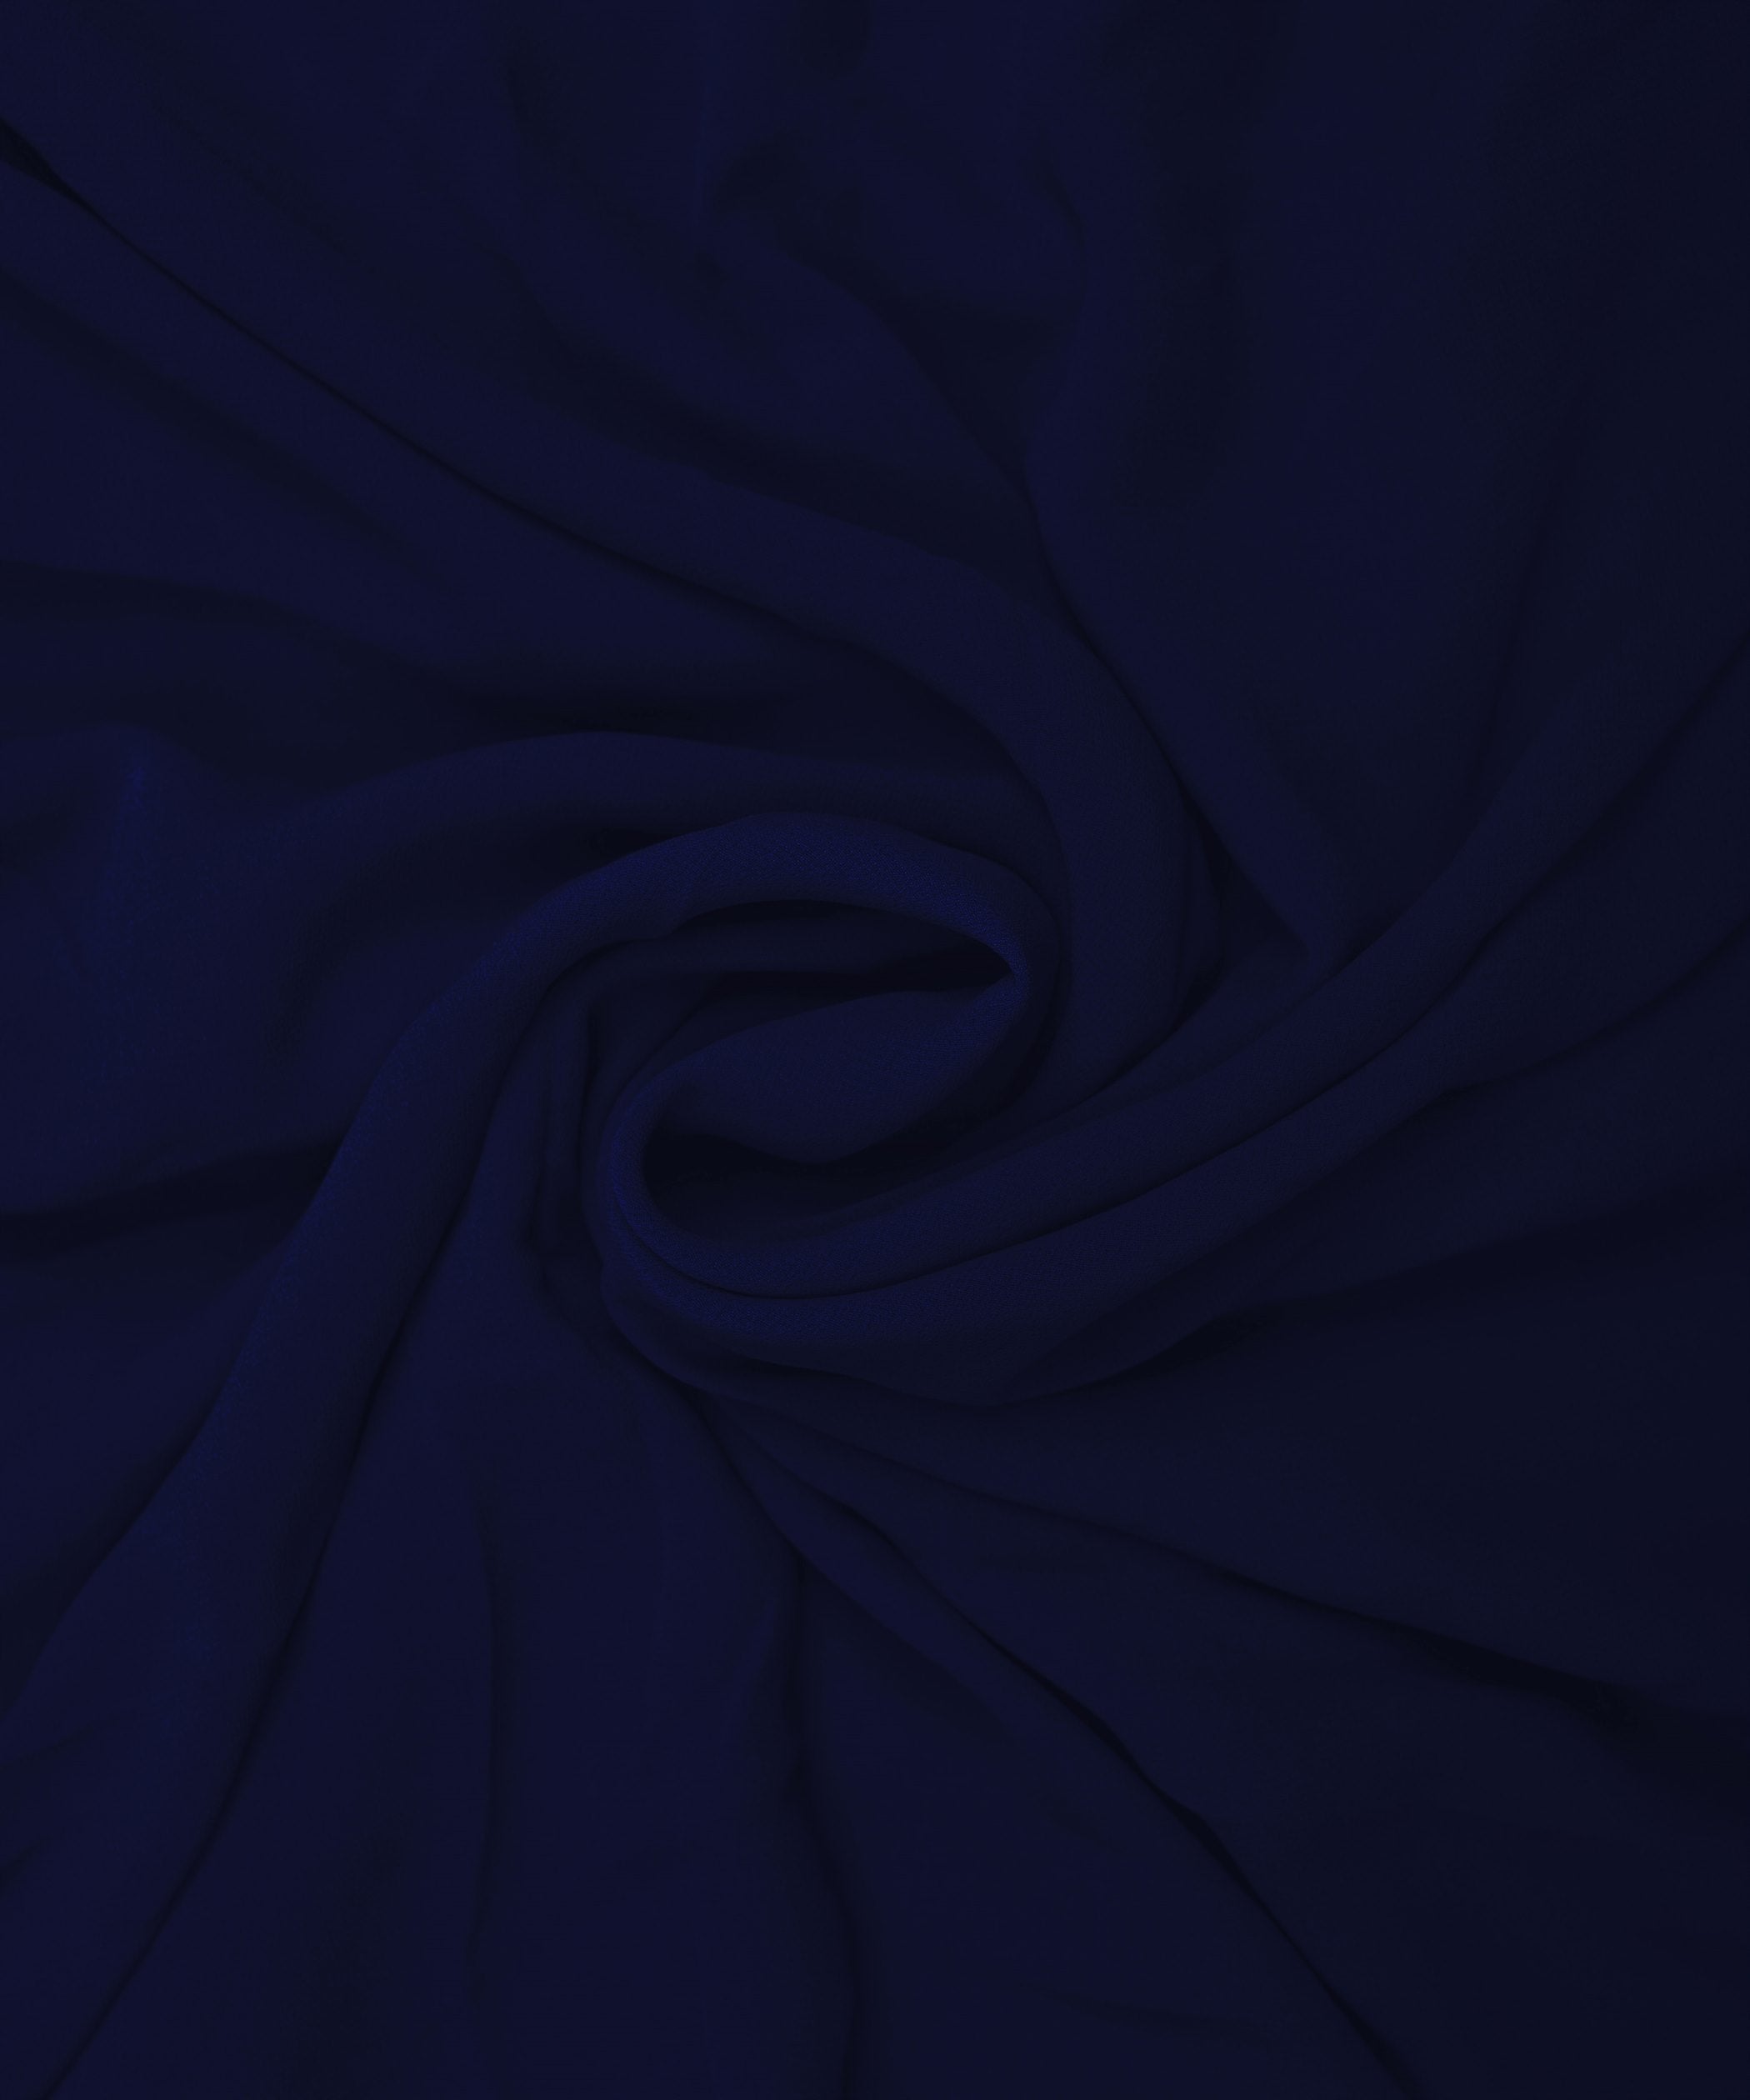 Navy Blue Plain Dyed Faux Georgette Fabric